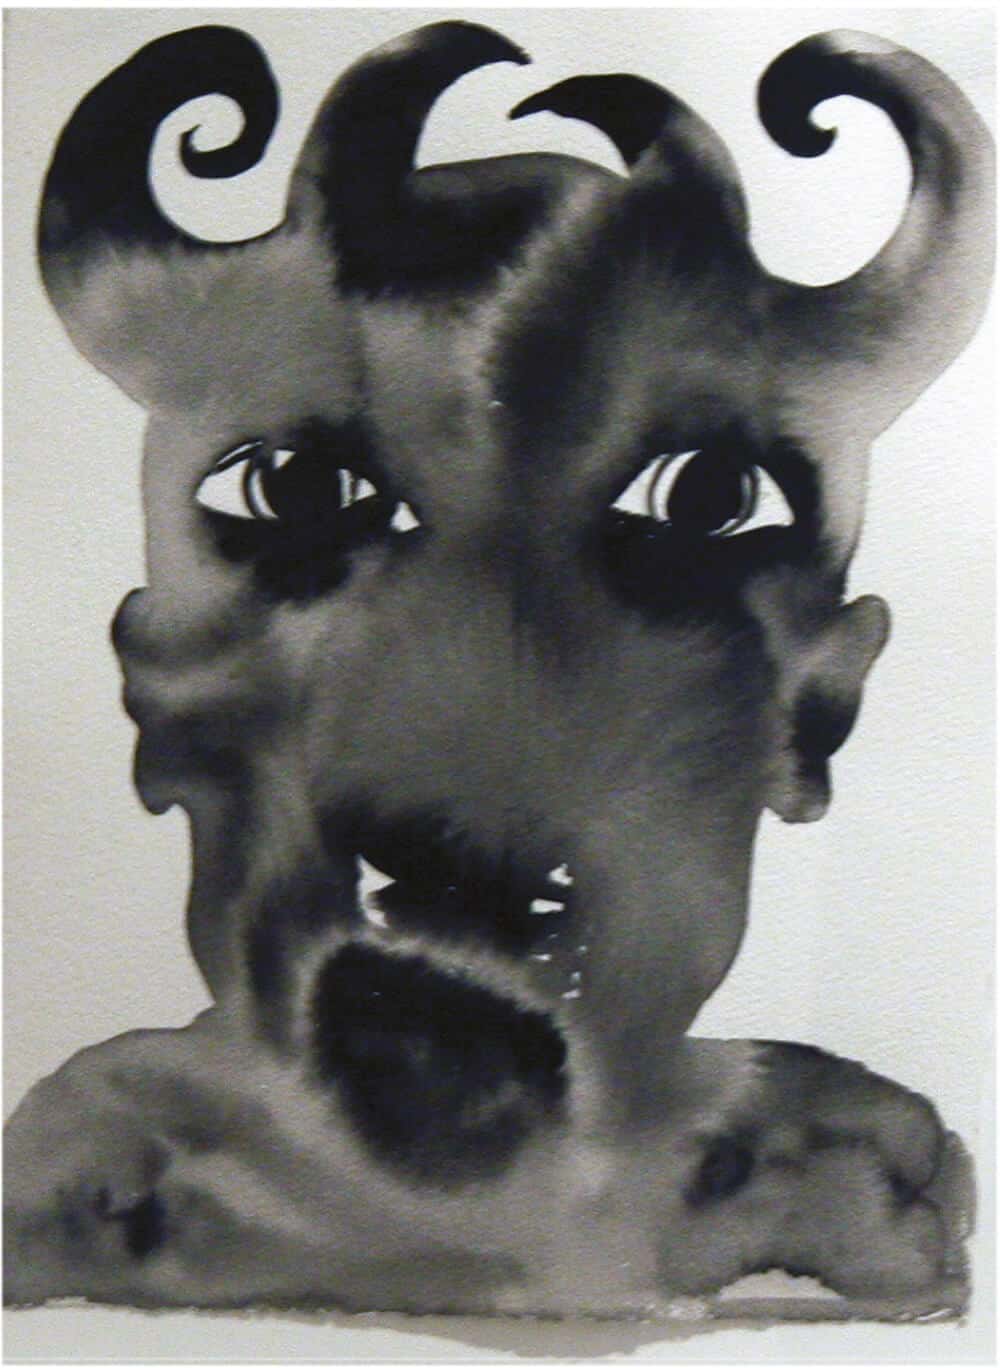 Barthélémy Togo, Devil Head No 5, 2016. ©Adagp, Paris. Images courtesy of Mario Mauroner Gallery, Vienna.